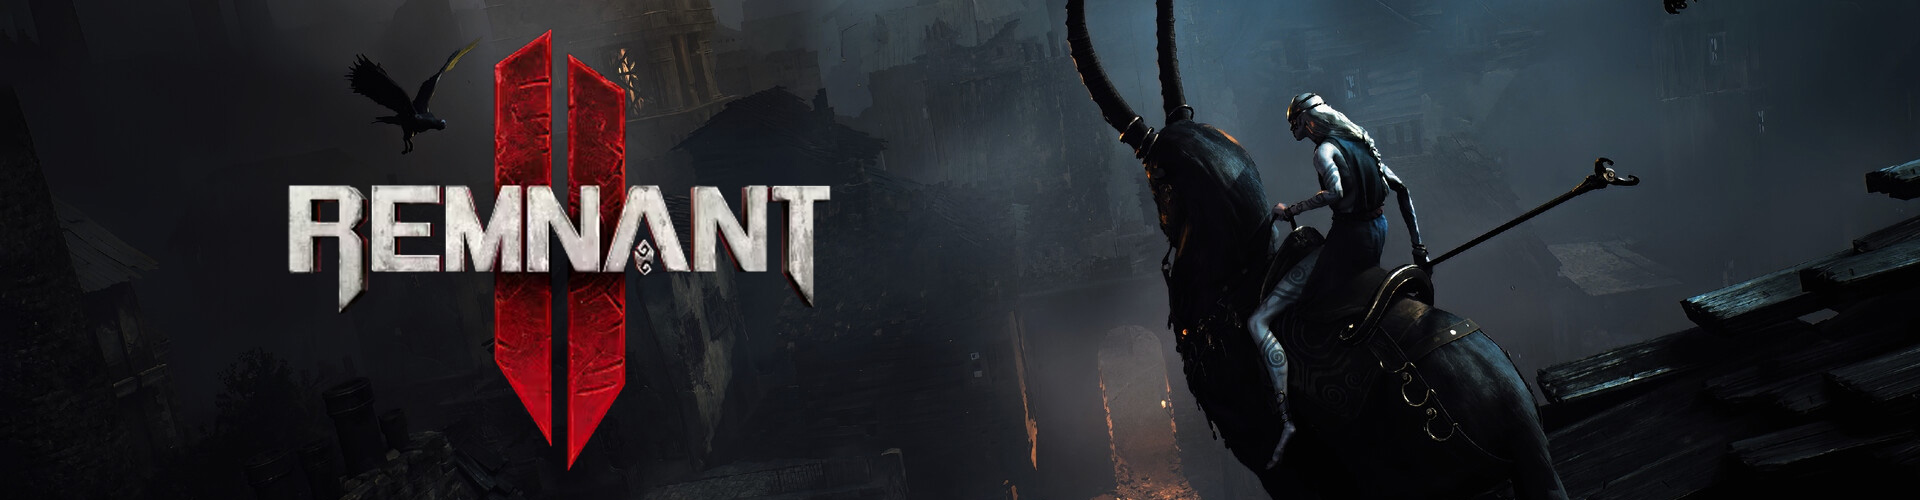 Remnant 2: een horror multiplayer Souls-like game